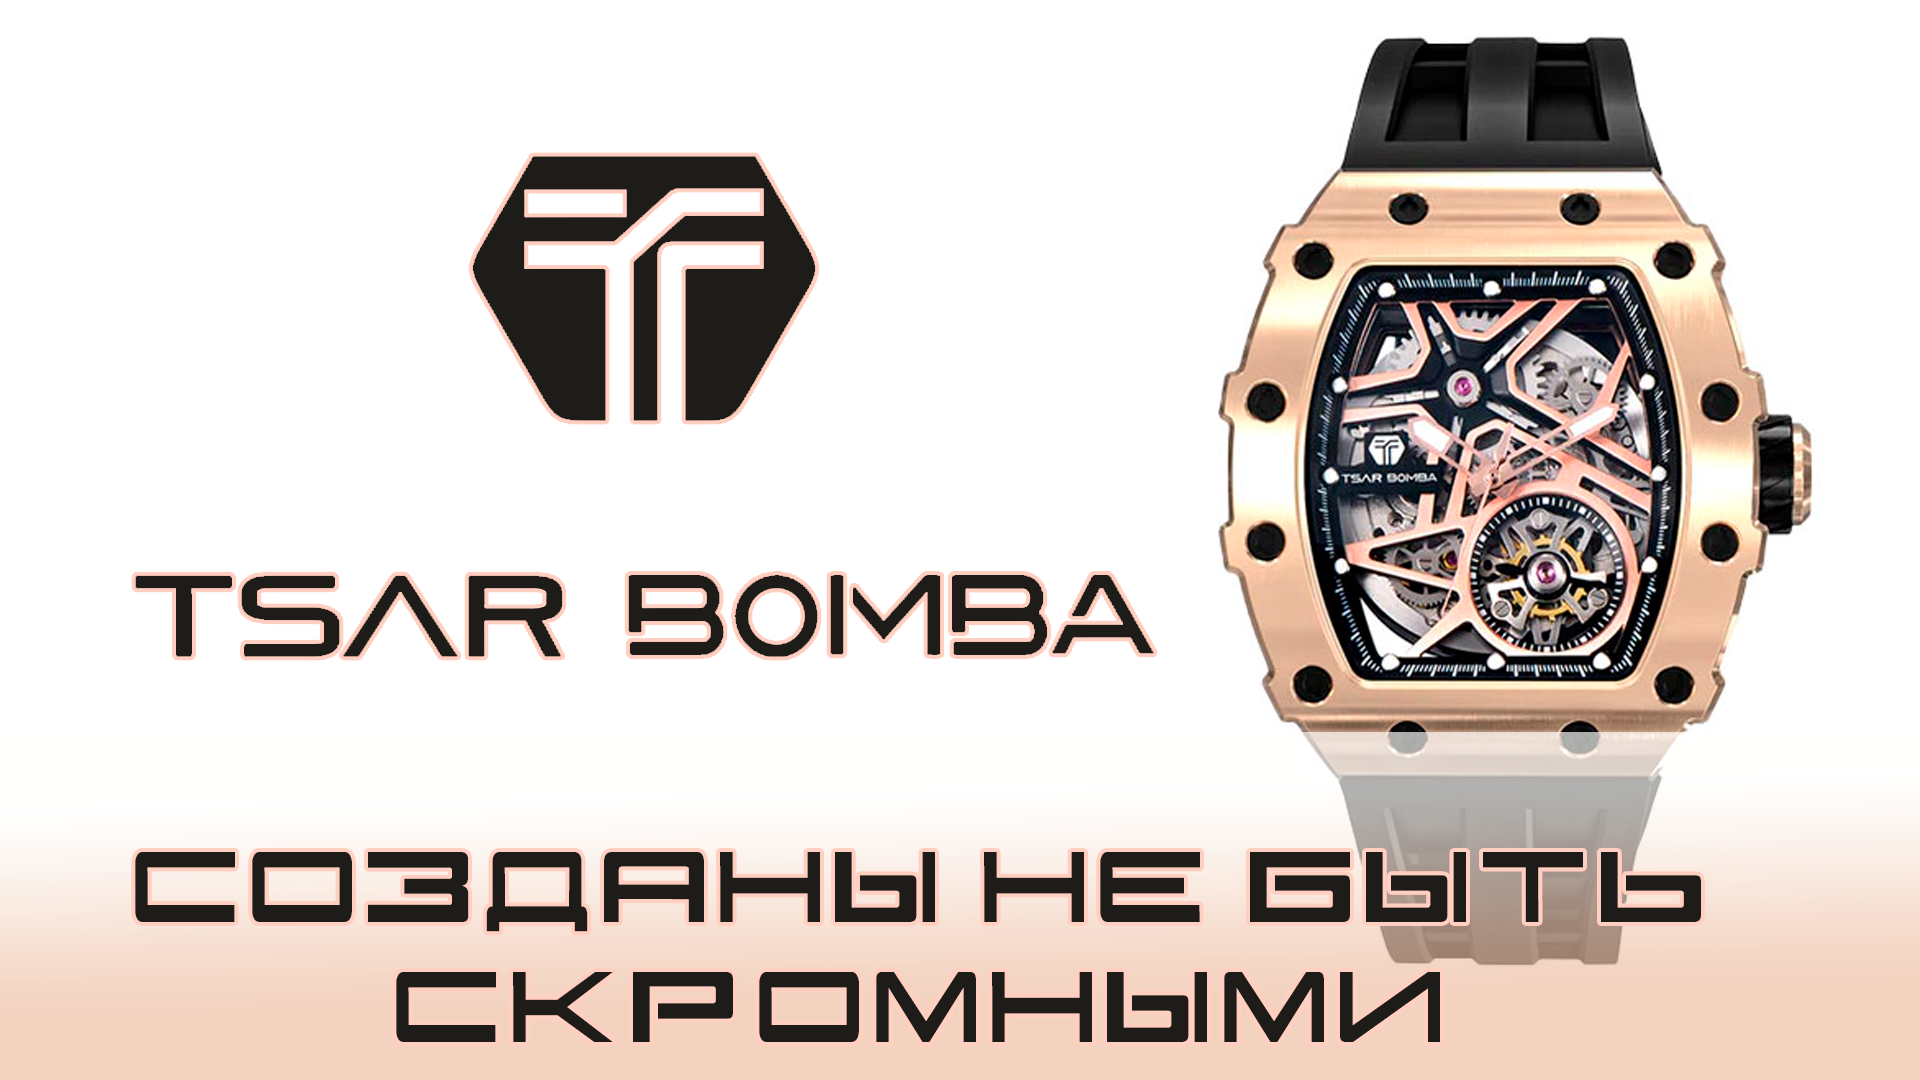 Часы Tsar Bomba, созданы не быть скромными!